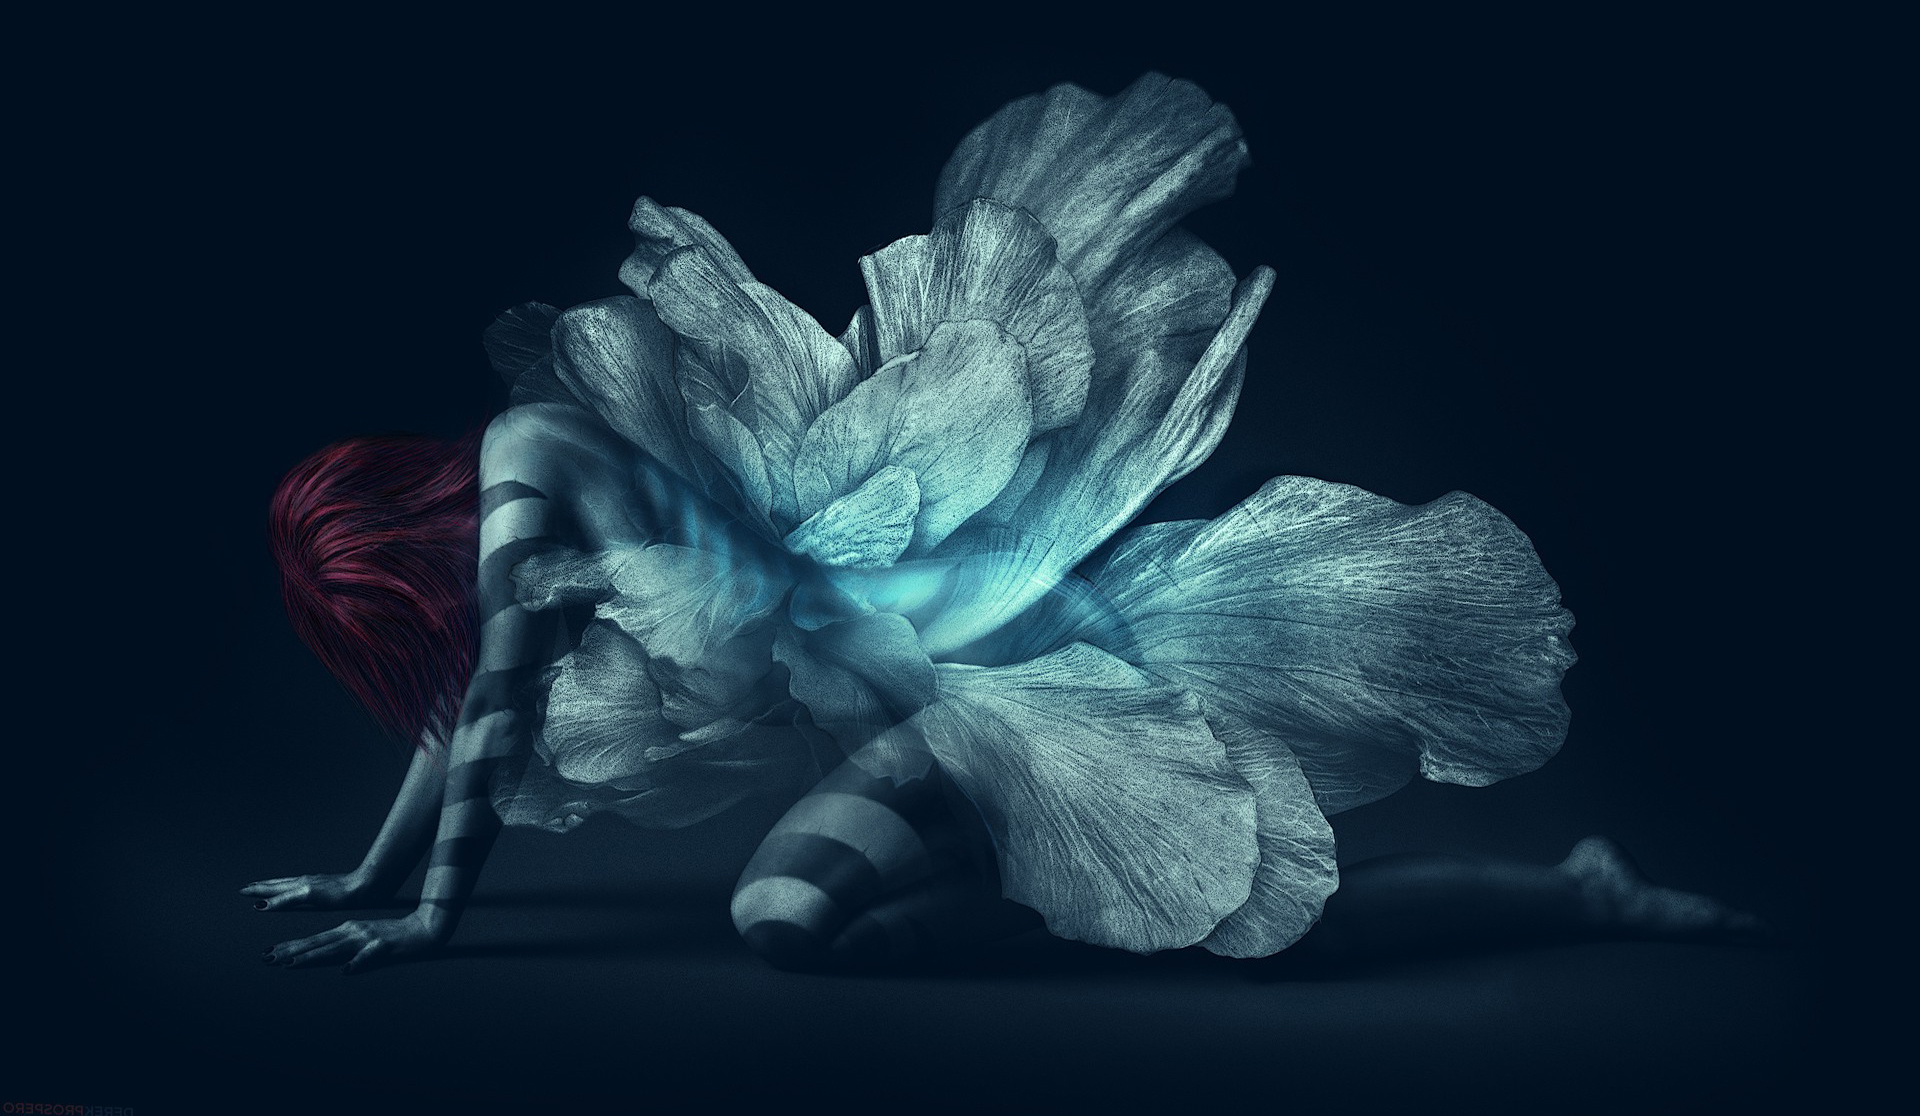 Red Hair Blue Wings Fairies Fantasy Art Artwork Flower Petals Lines Over Body Wallpaper